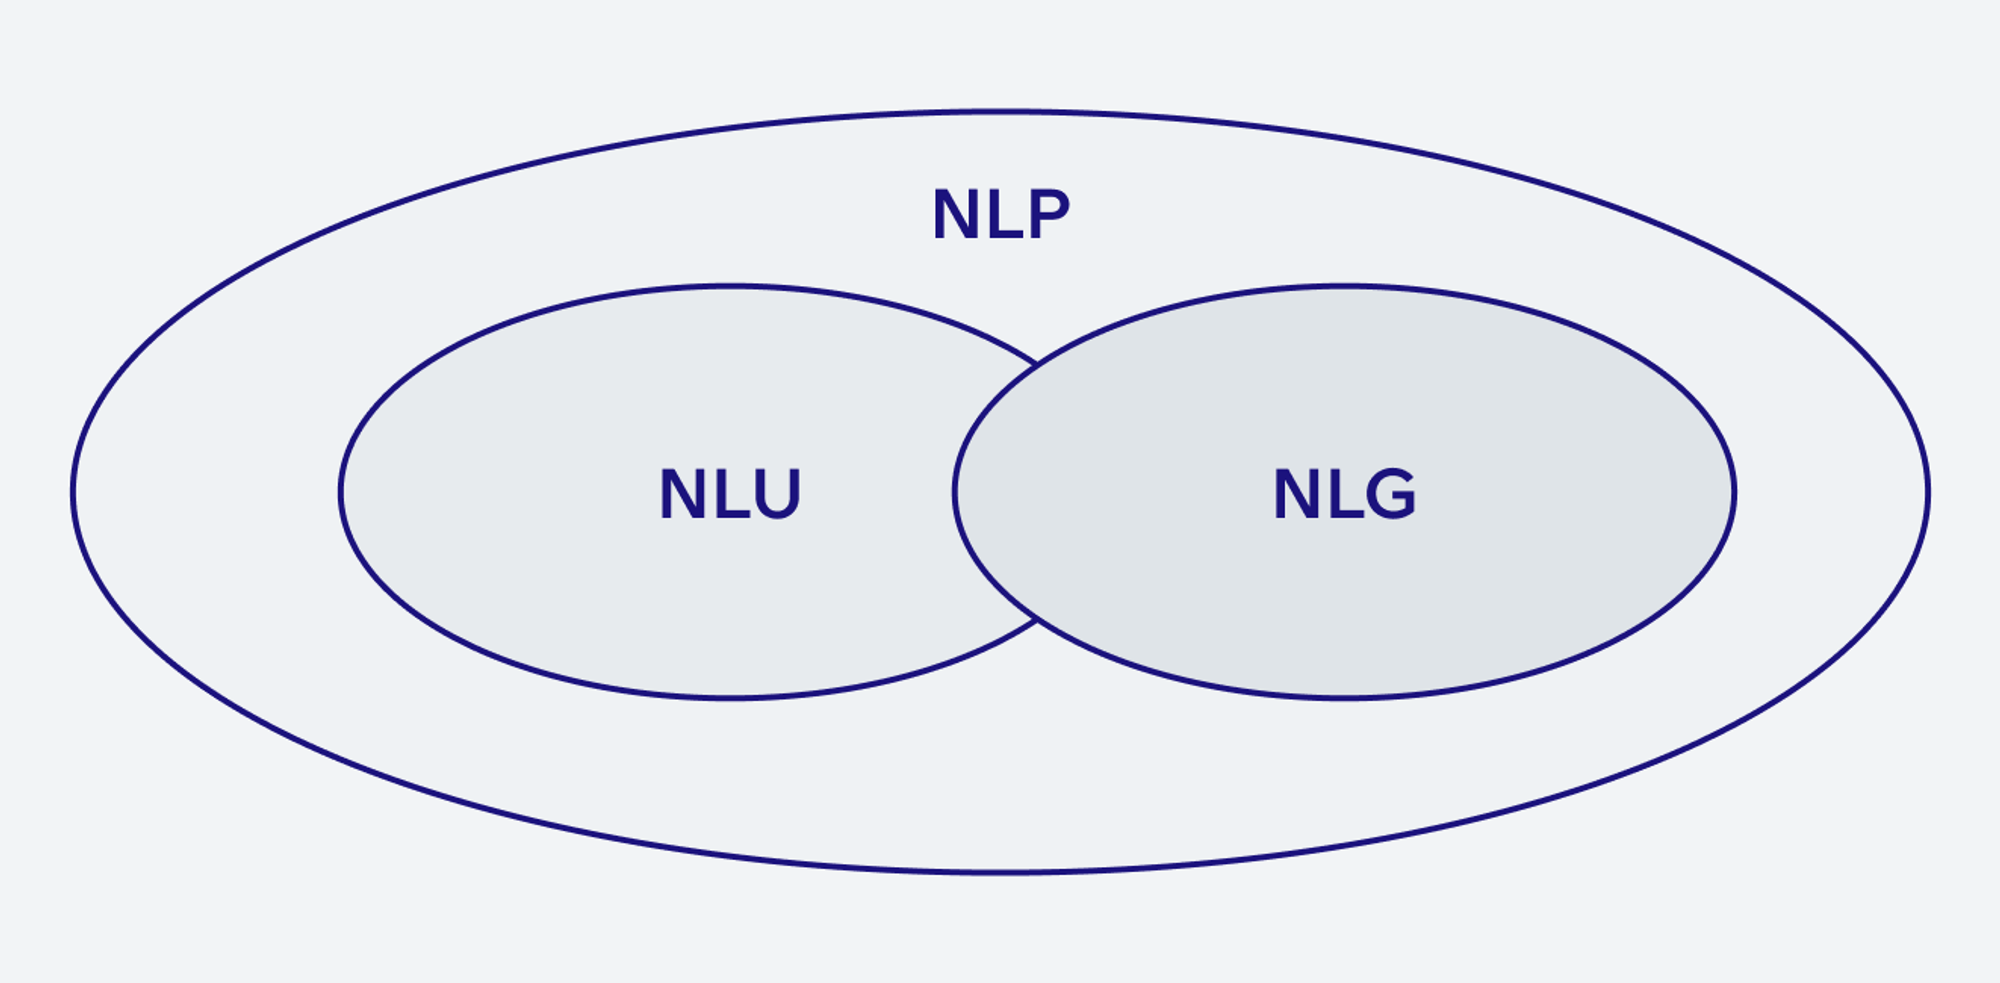 Subfields of NLP